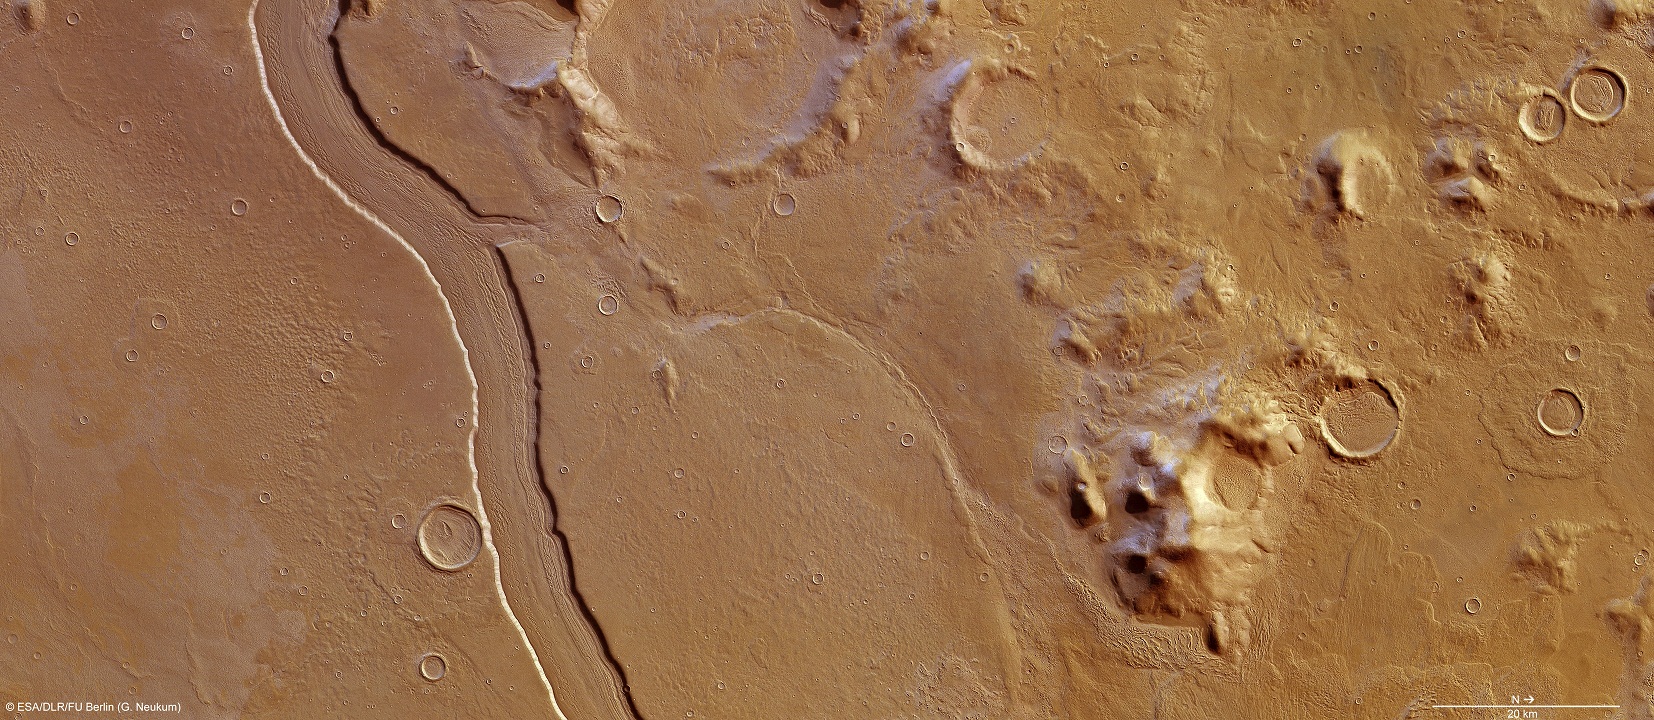 Заснеха огромно речно корито на Марс